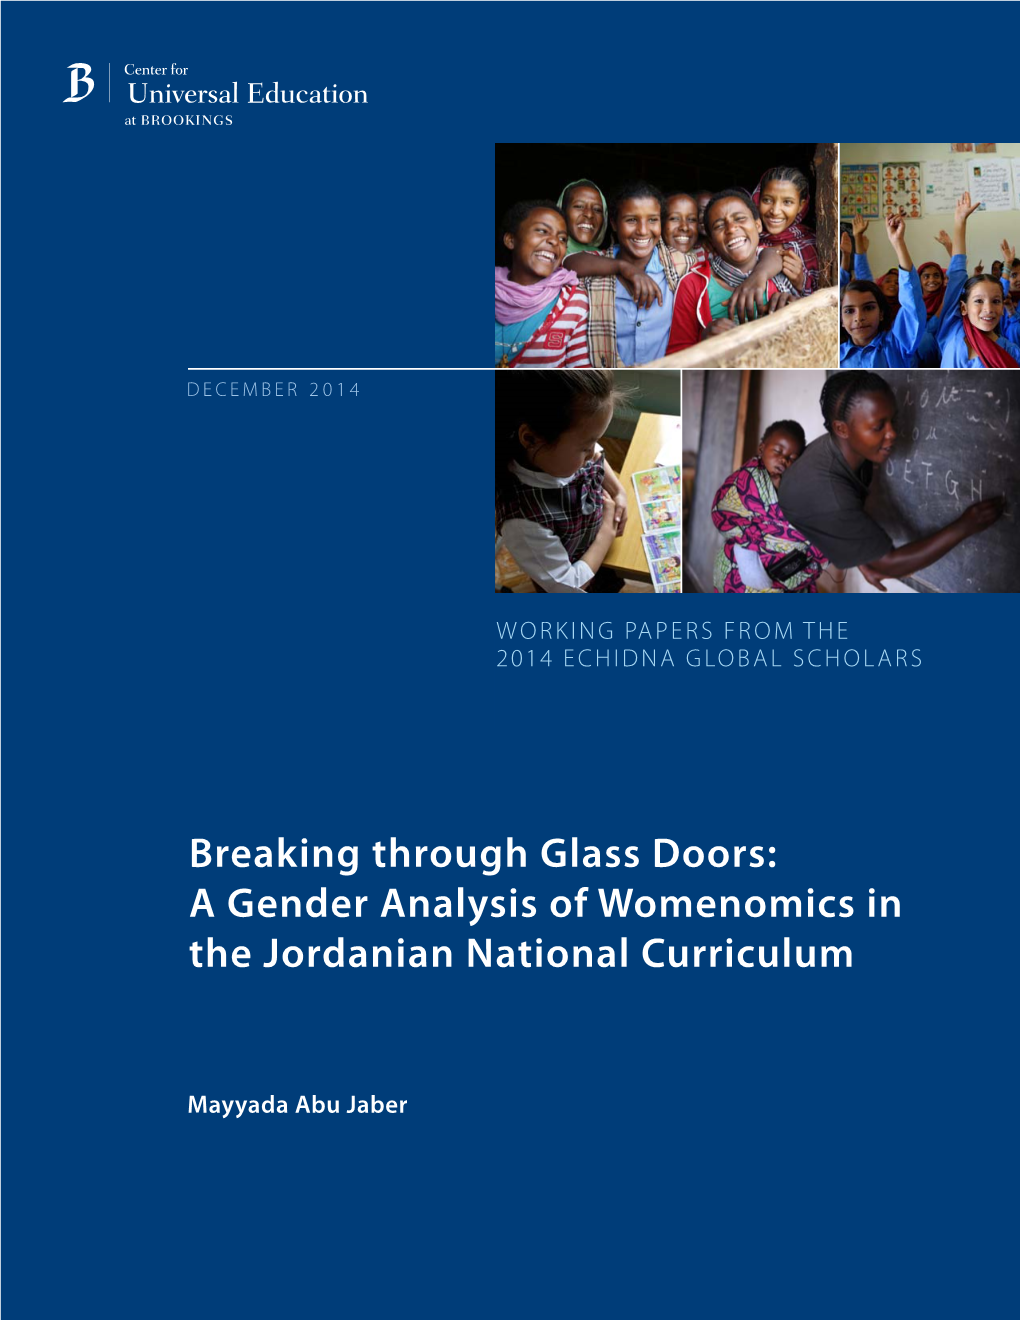 A Gender Analysis of Womenomics in the Jordanian National Curriculum